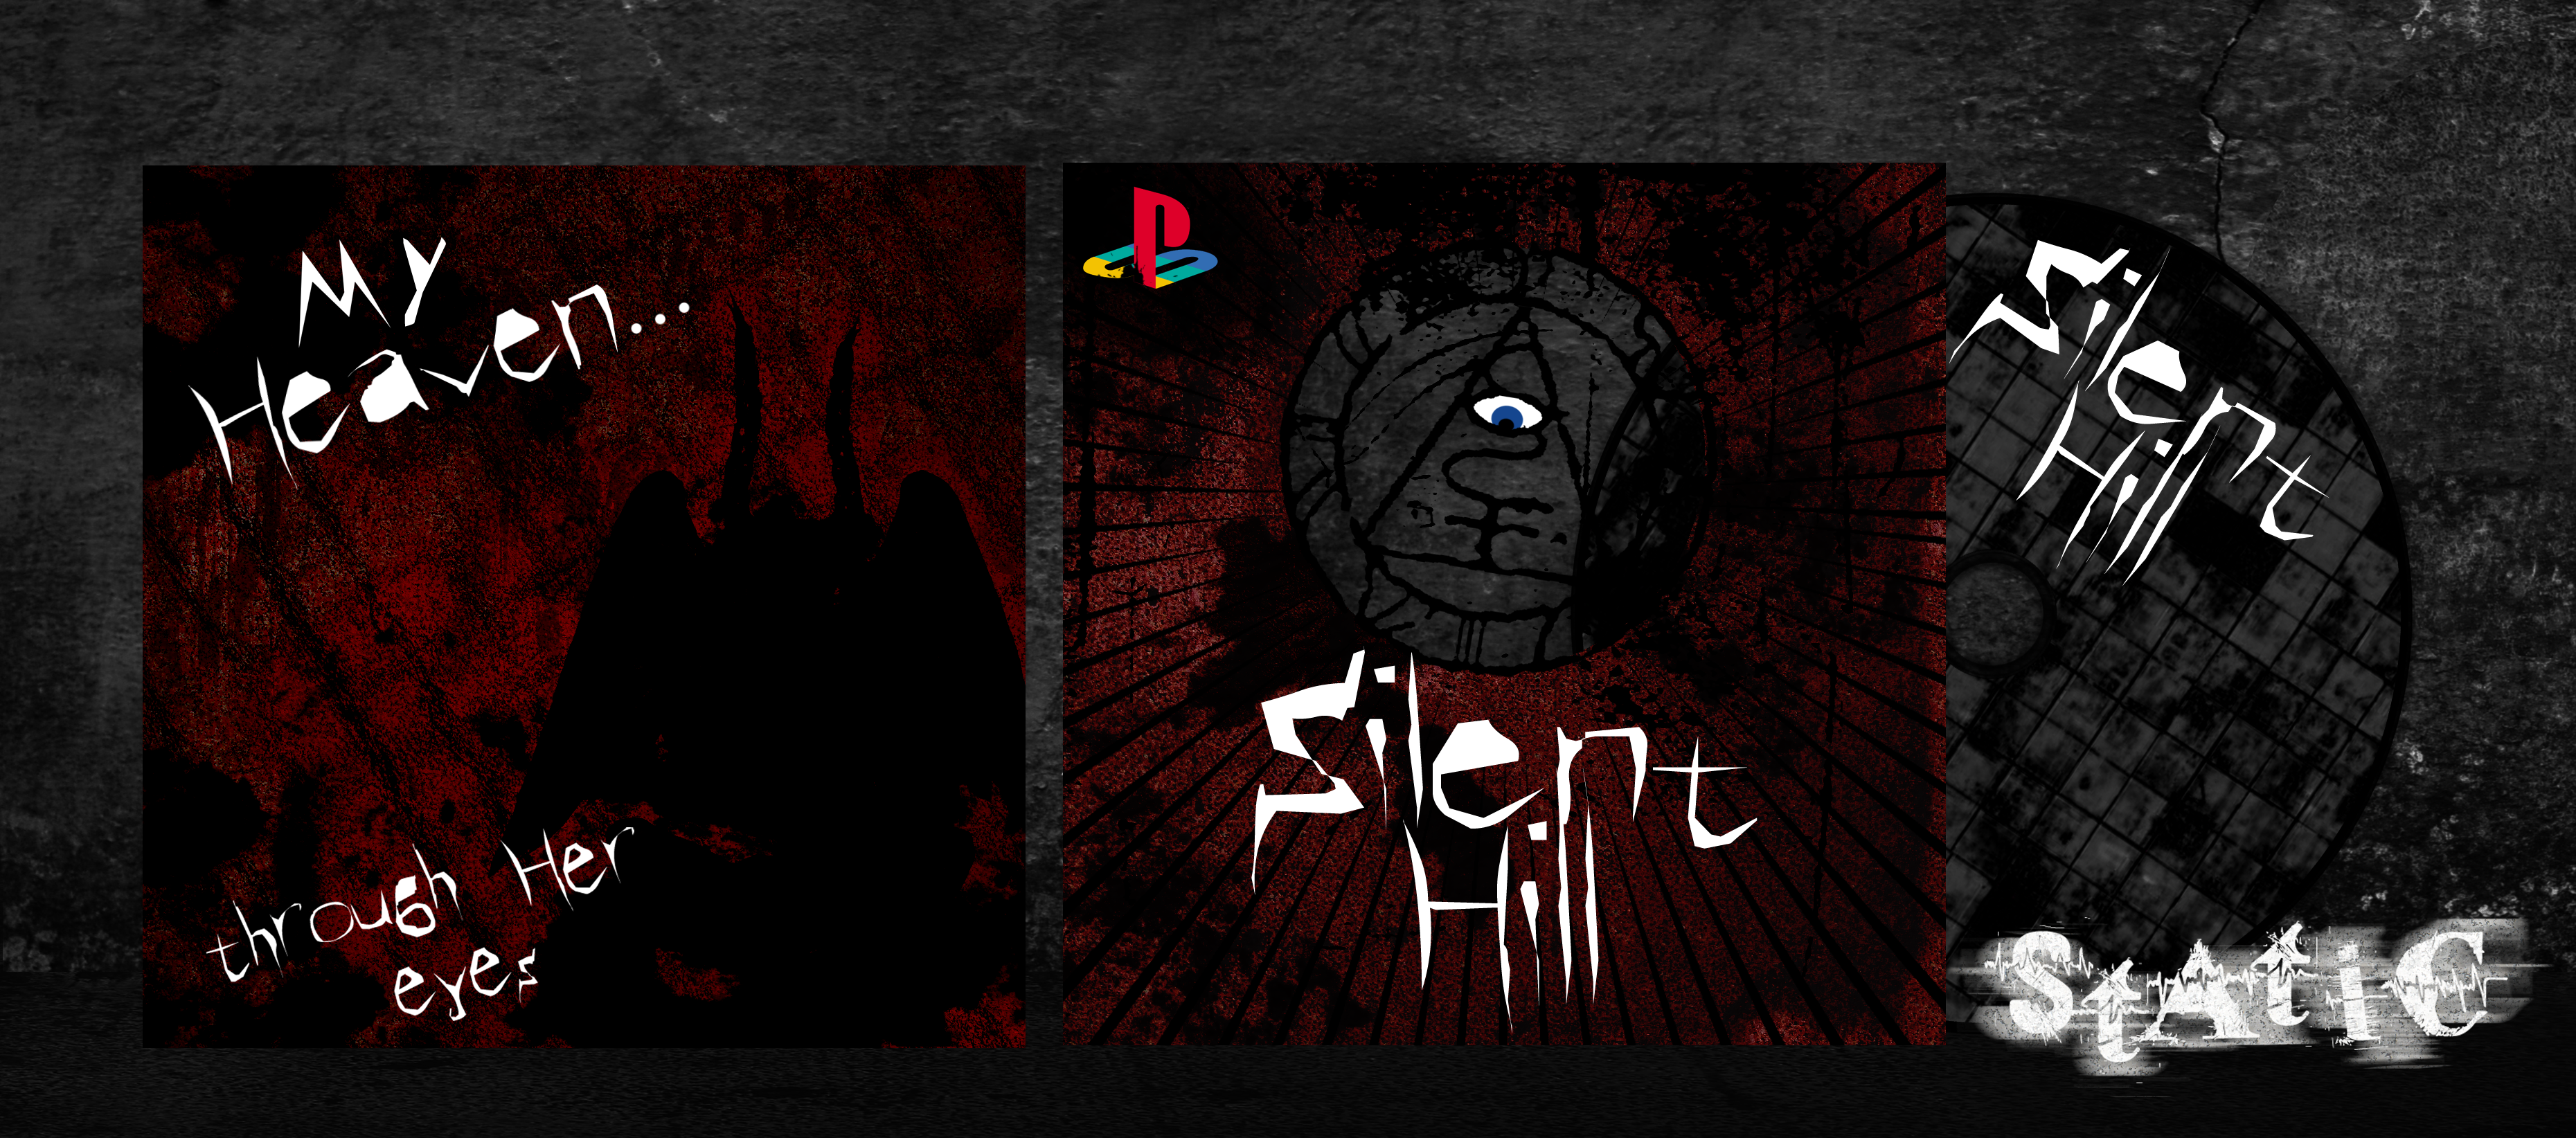 Silent Hill box cover